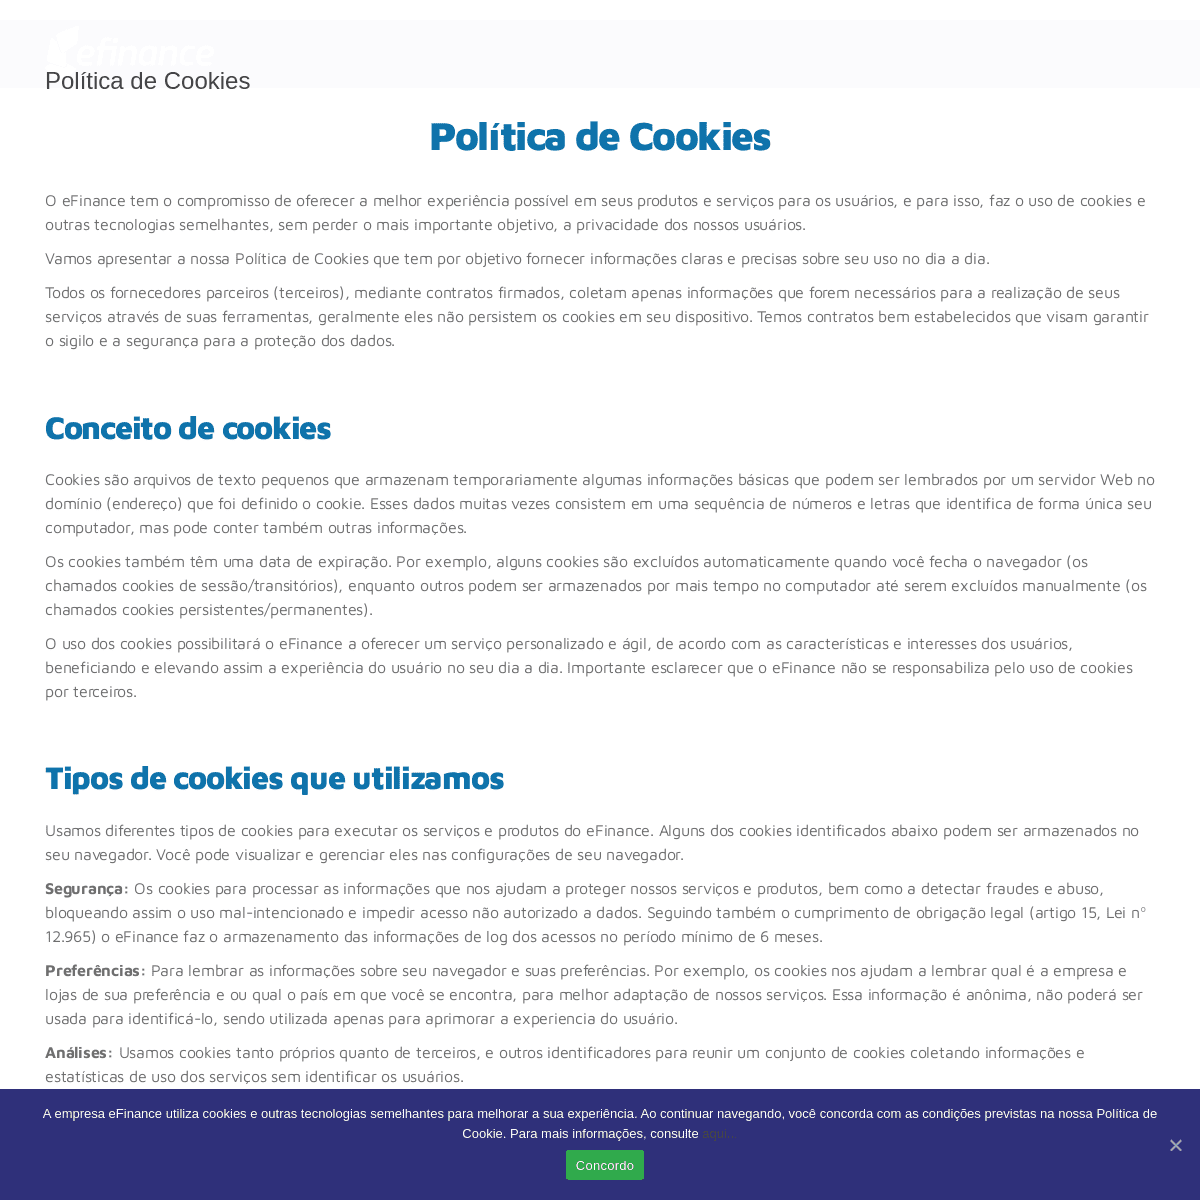 A complete backup of https://www.efinance.com.br/politica-de-cookies/